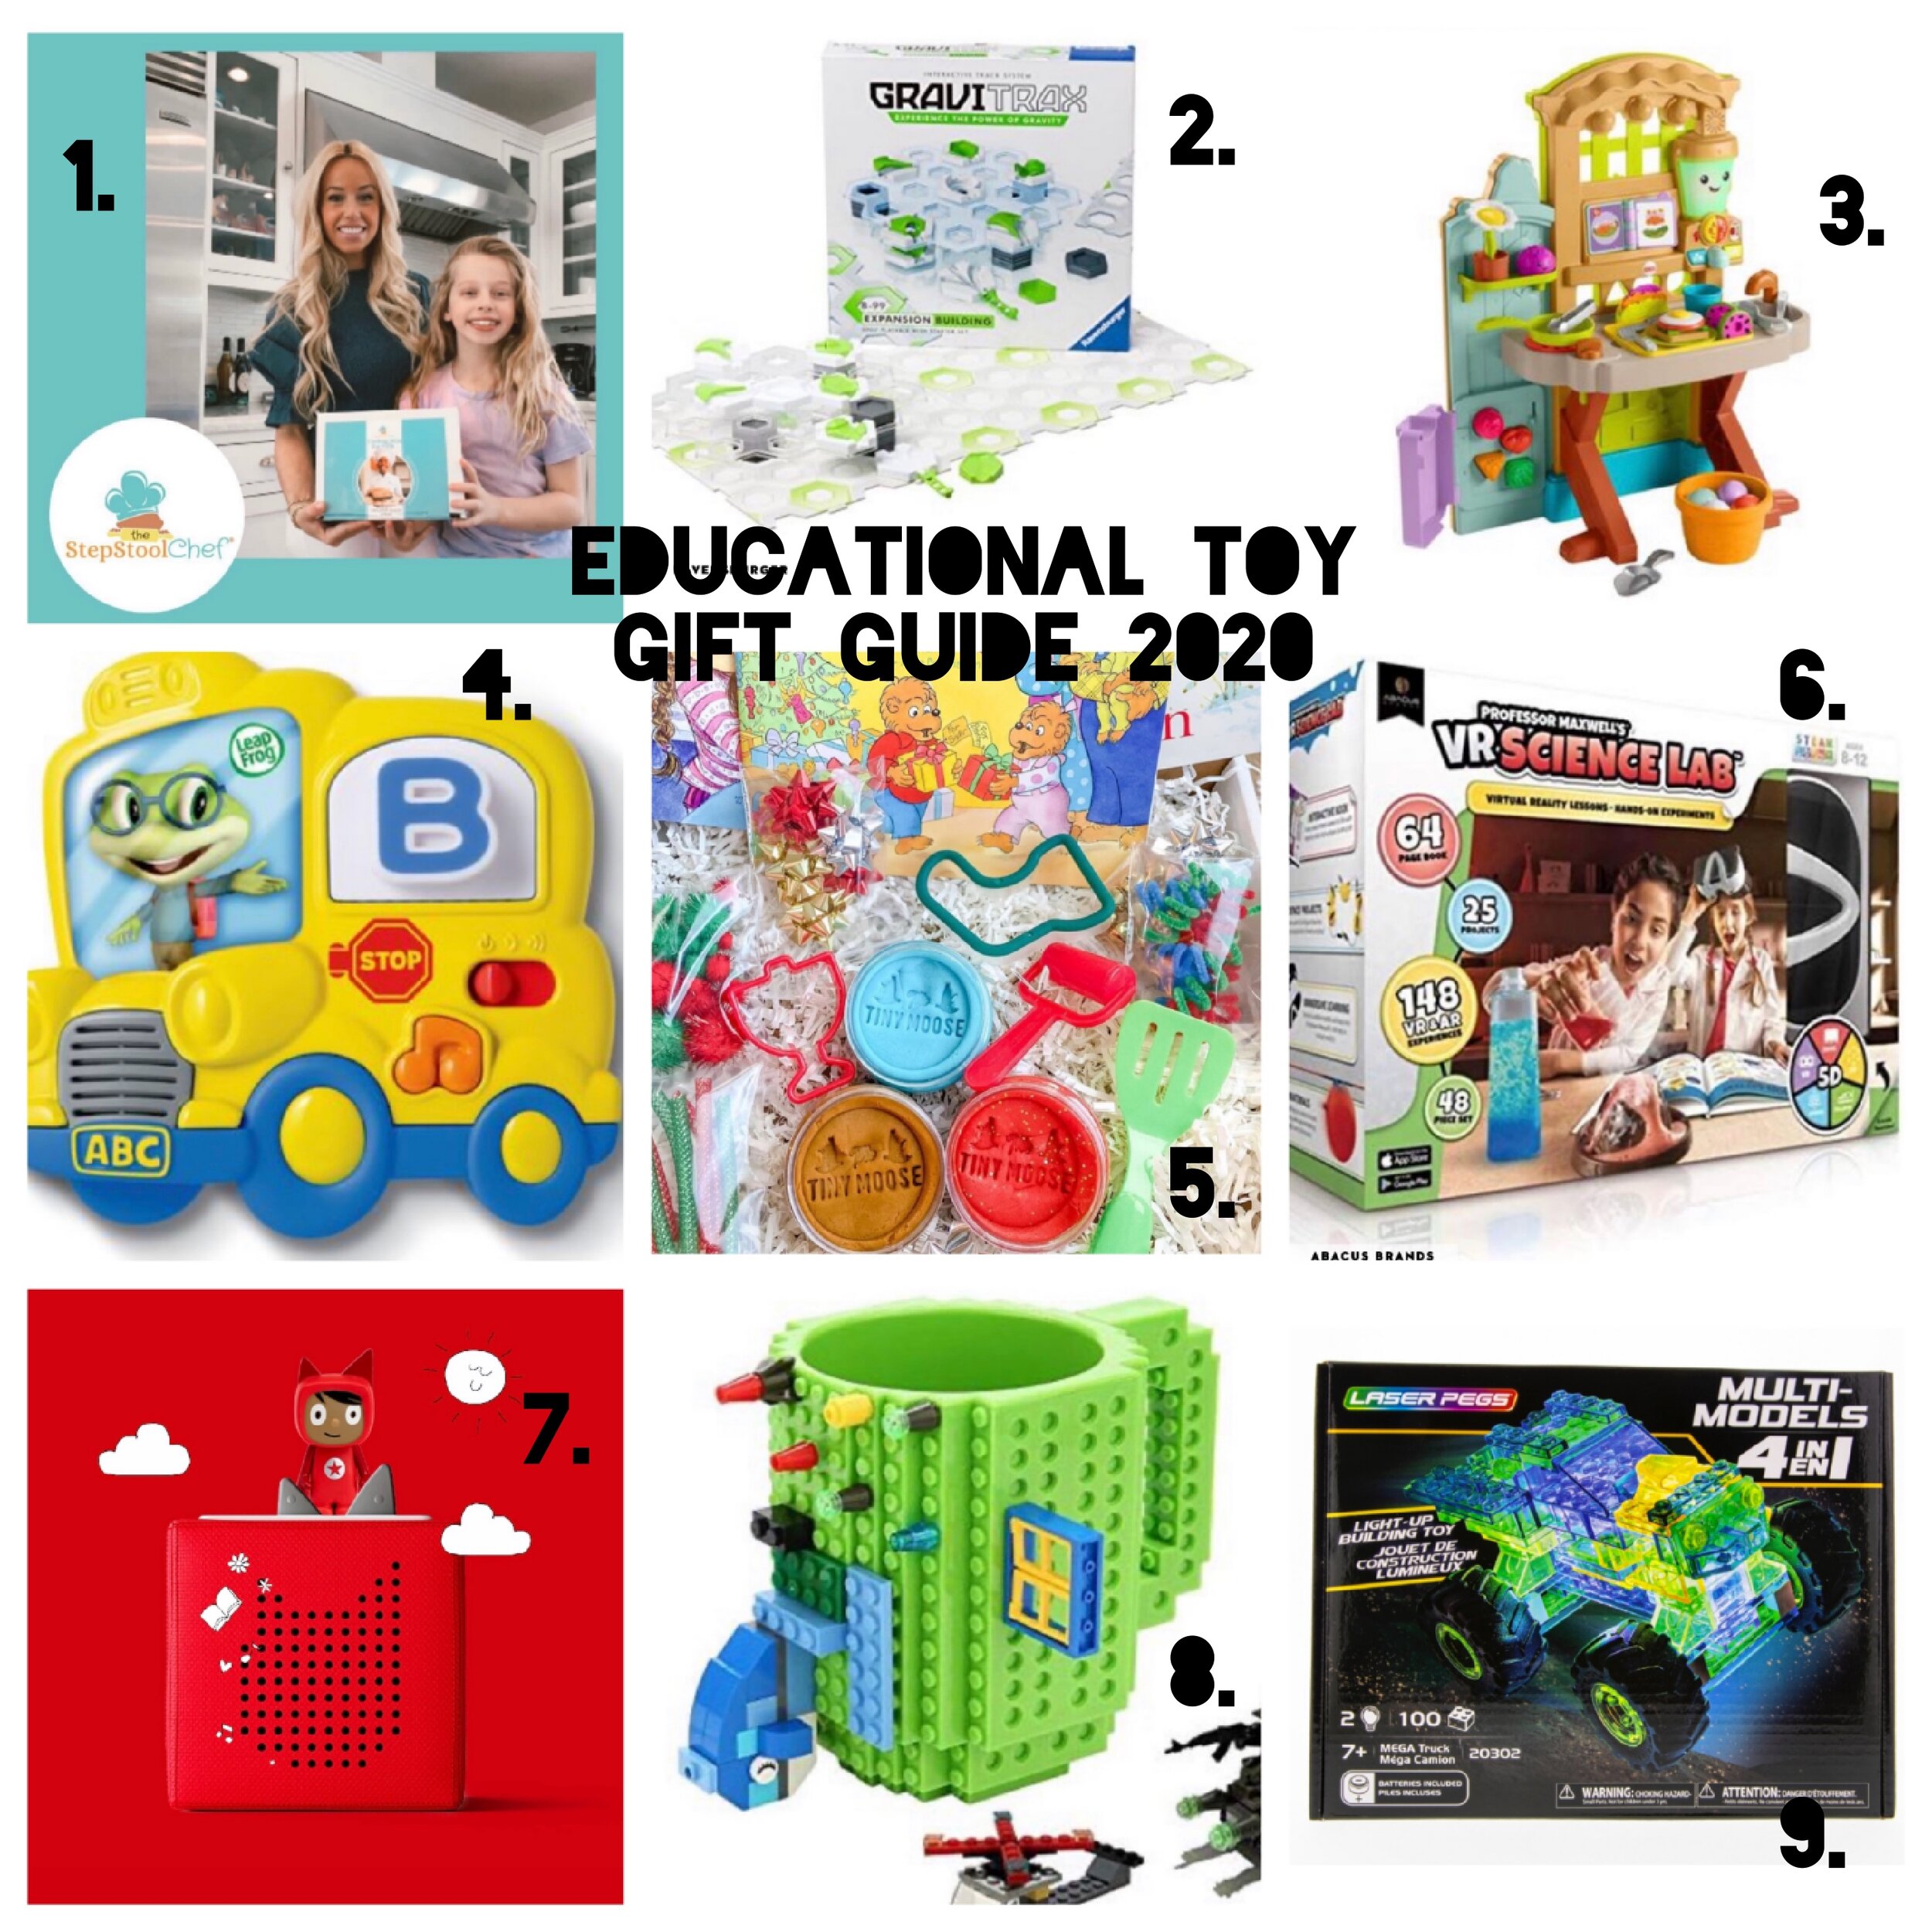 https://images.squarespace-cdn.com/content/v1/5743c5834d088e1e7429b6d7/1606493138947-FDDVB77DV5P7HU5LNO9Y/educational+toy+gift+guide_Fotor.jpg